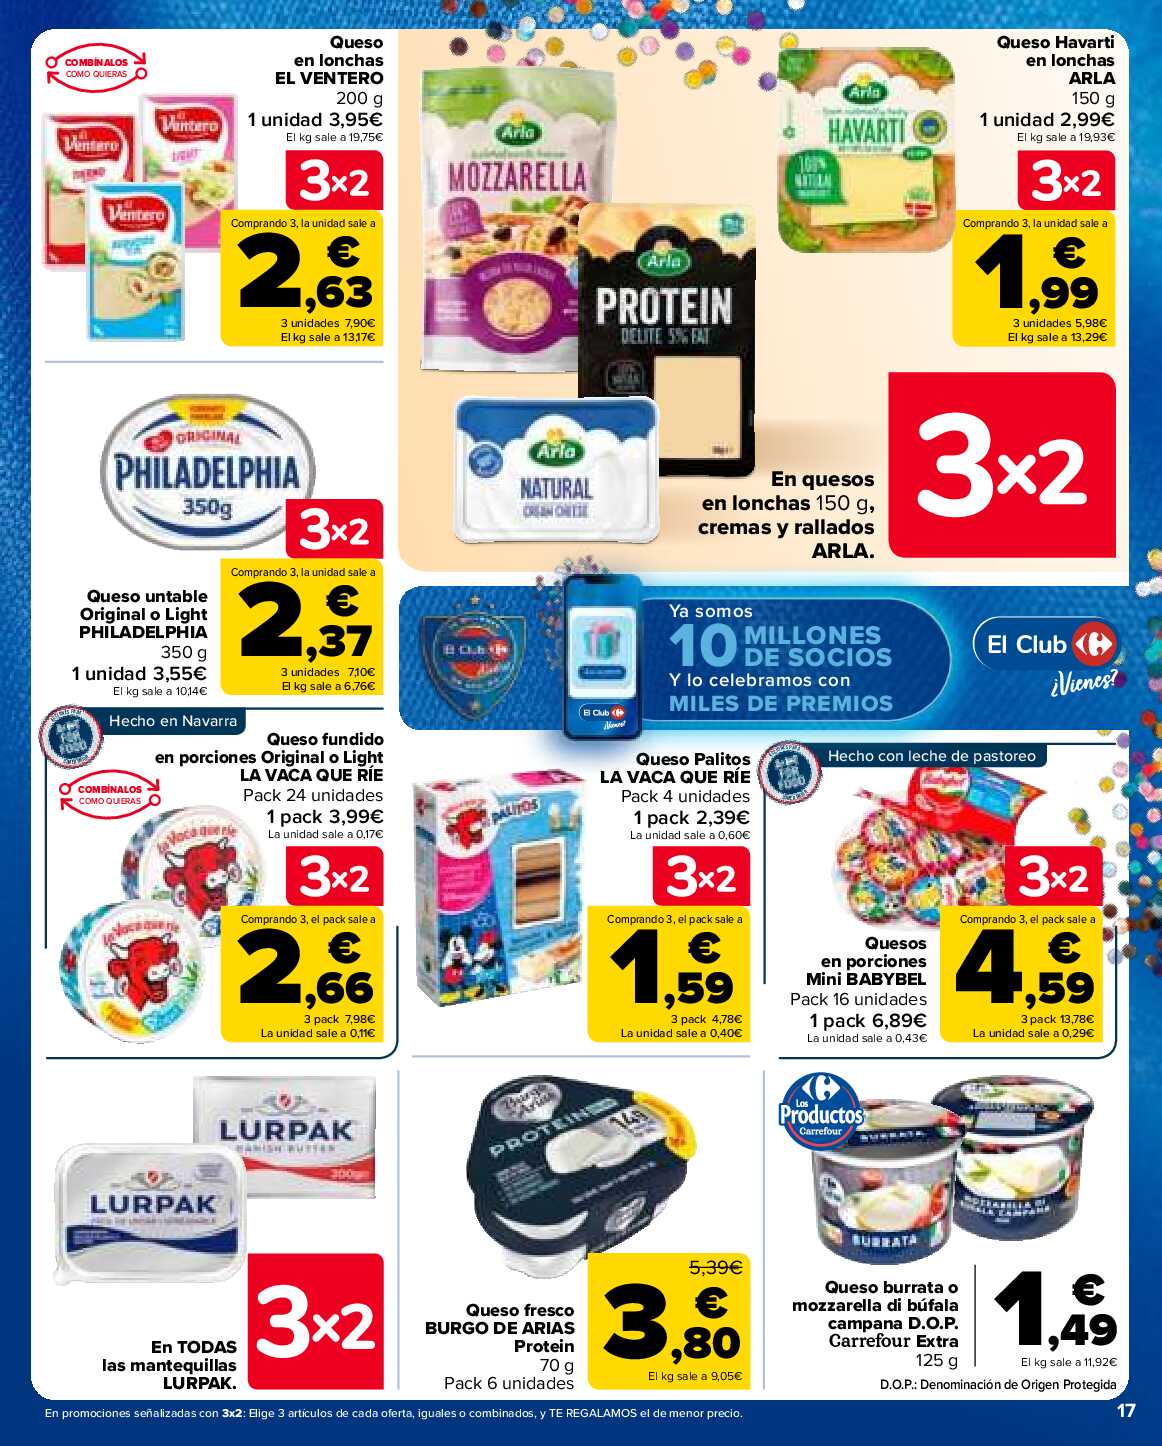 3x2 Carrefour Carrefour. Página 17